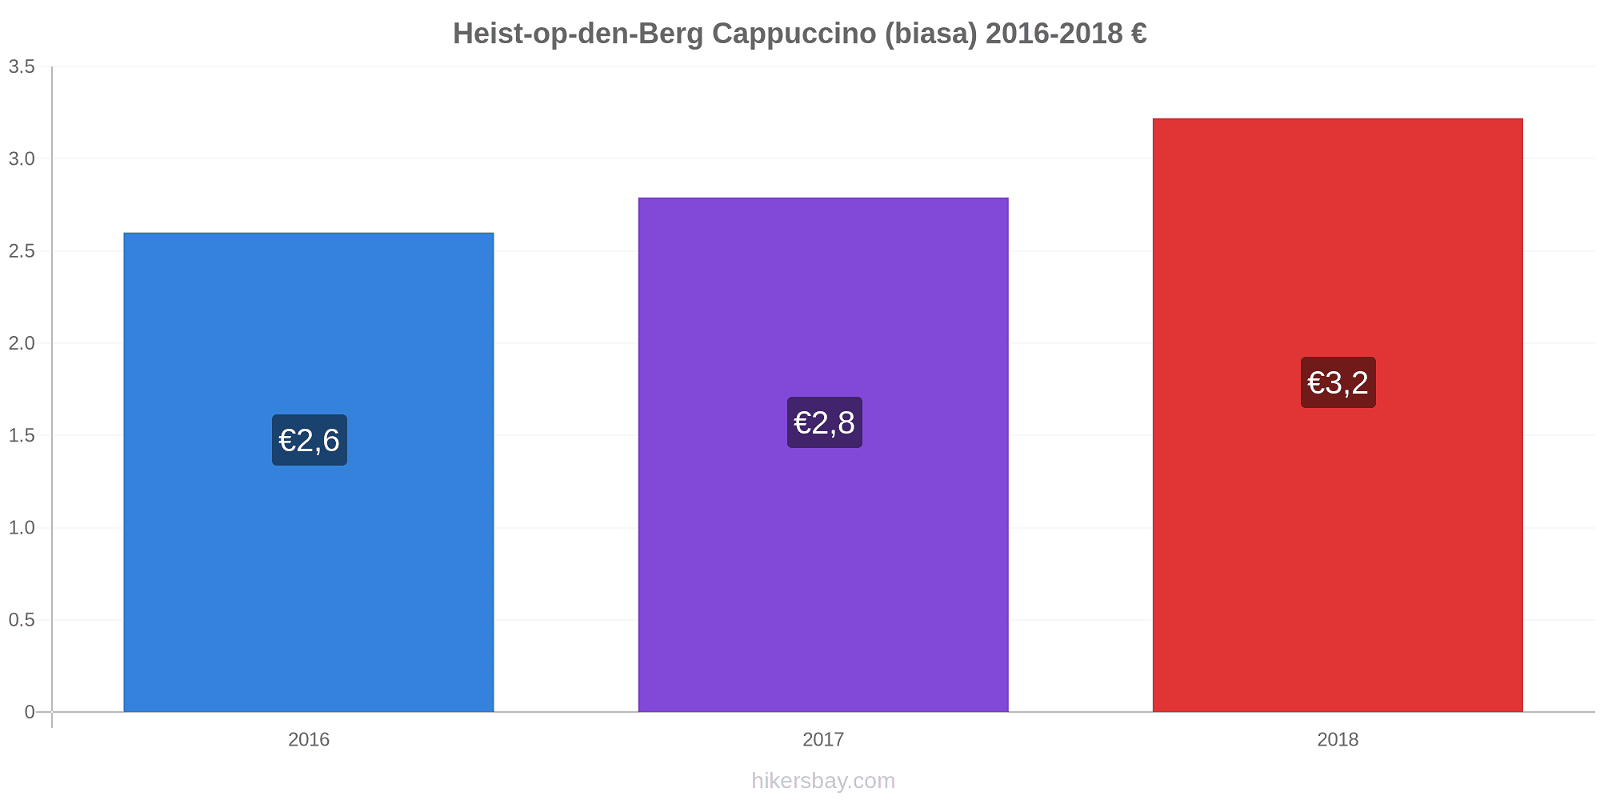 Heist-op-den-Berg perubahan harga Cappuccino (biasa) hikersbay.com